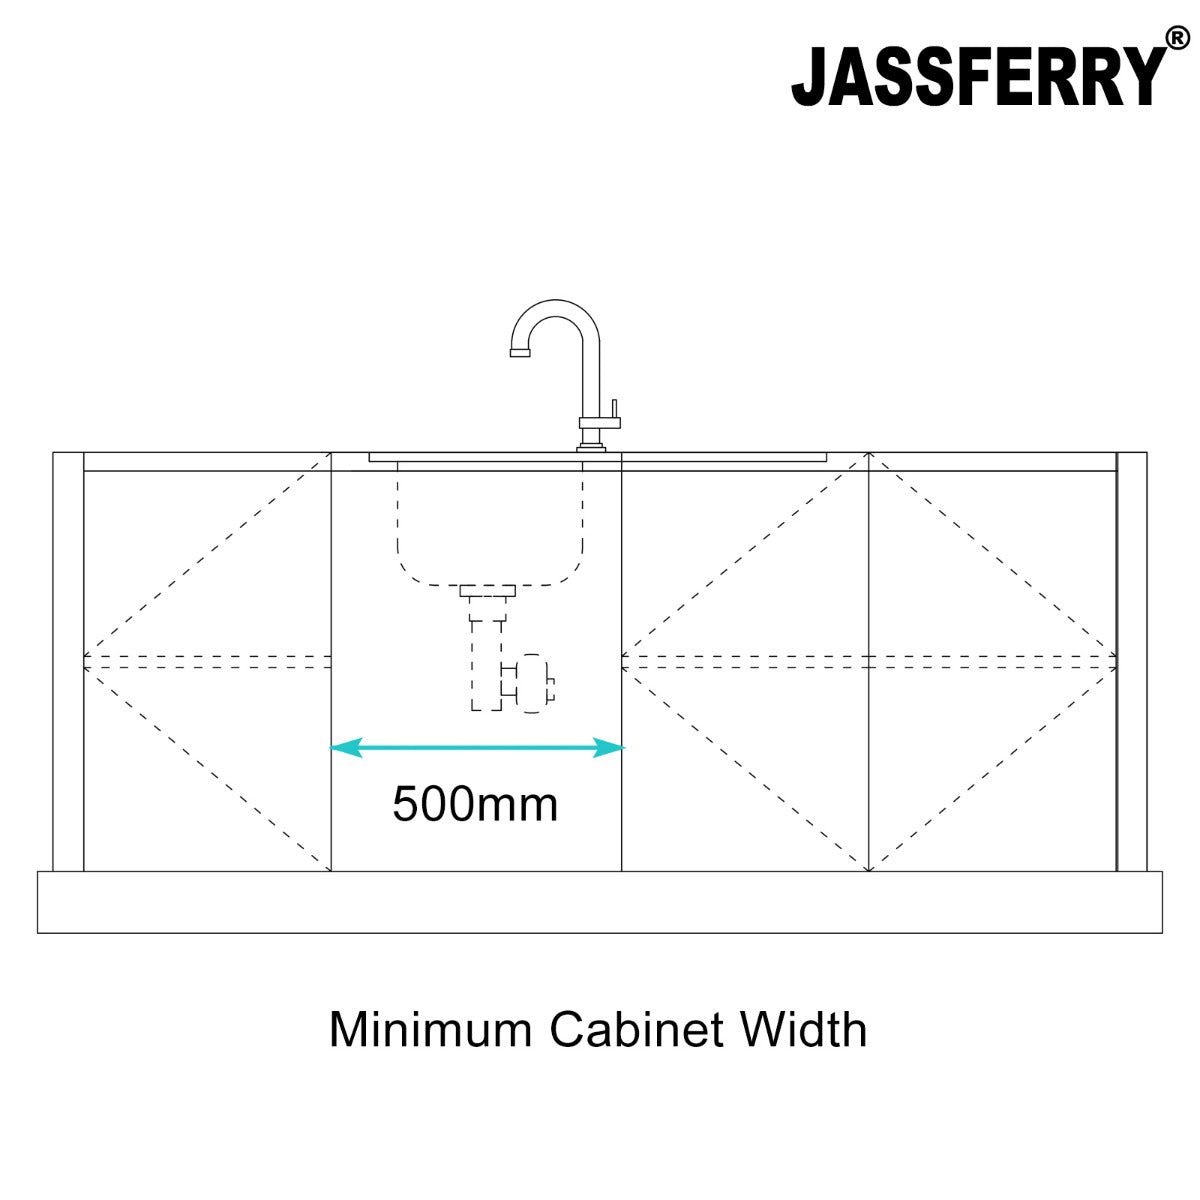 JassferryJASSFERRY Inset Stainless Steel Kitchen Sink Single 1 Bowl Reversible DrainerKitchen Sinks